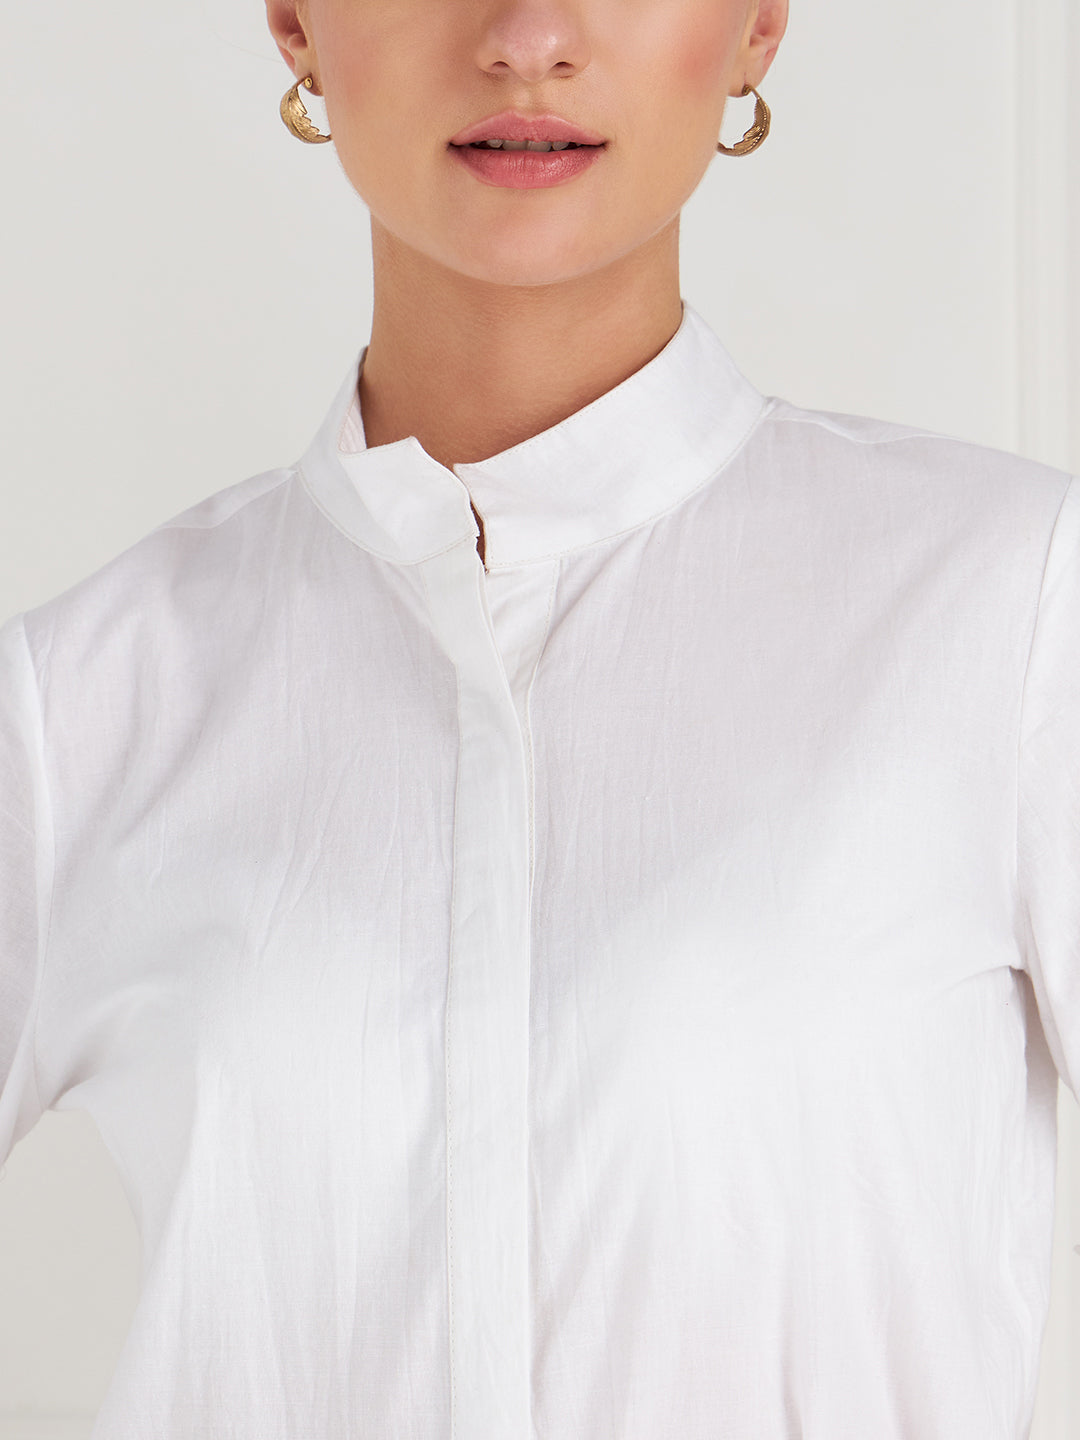 Athena White Mandarin Collar Puff Sleeves Ruffled Cotton Shirt Style Top - Athena Lifestyle